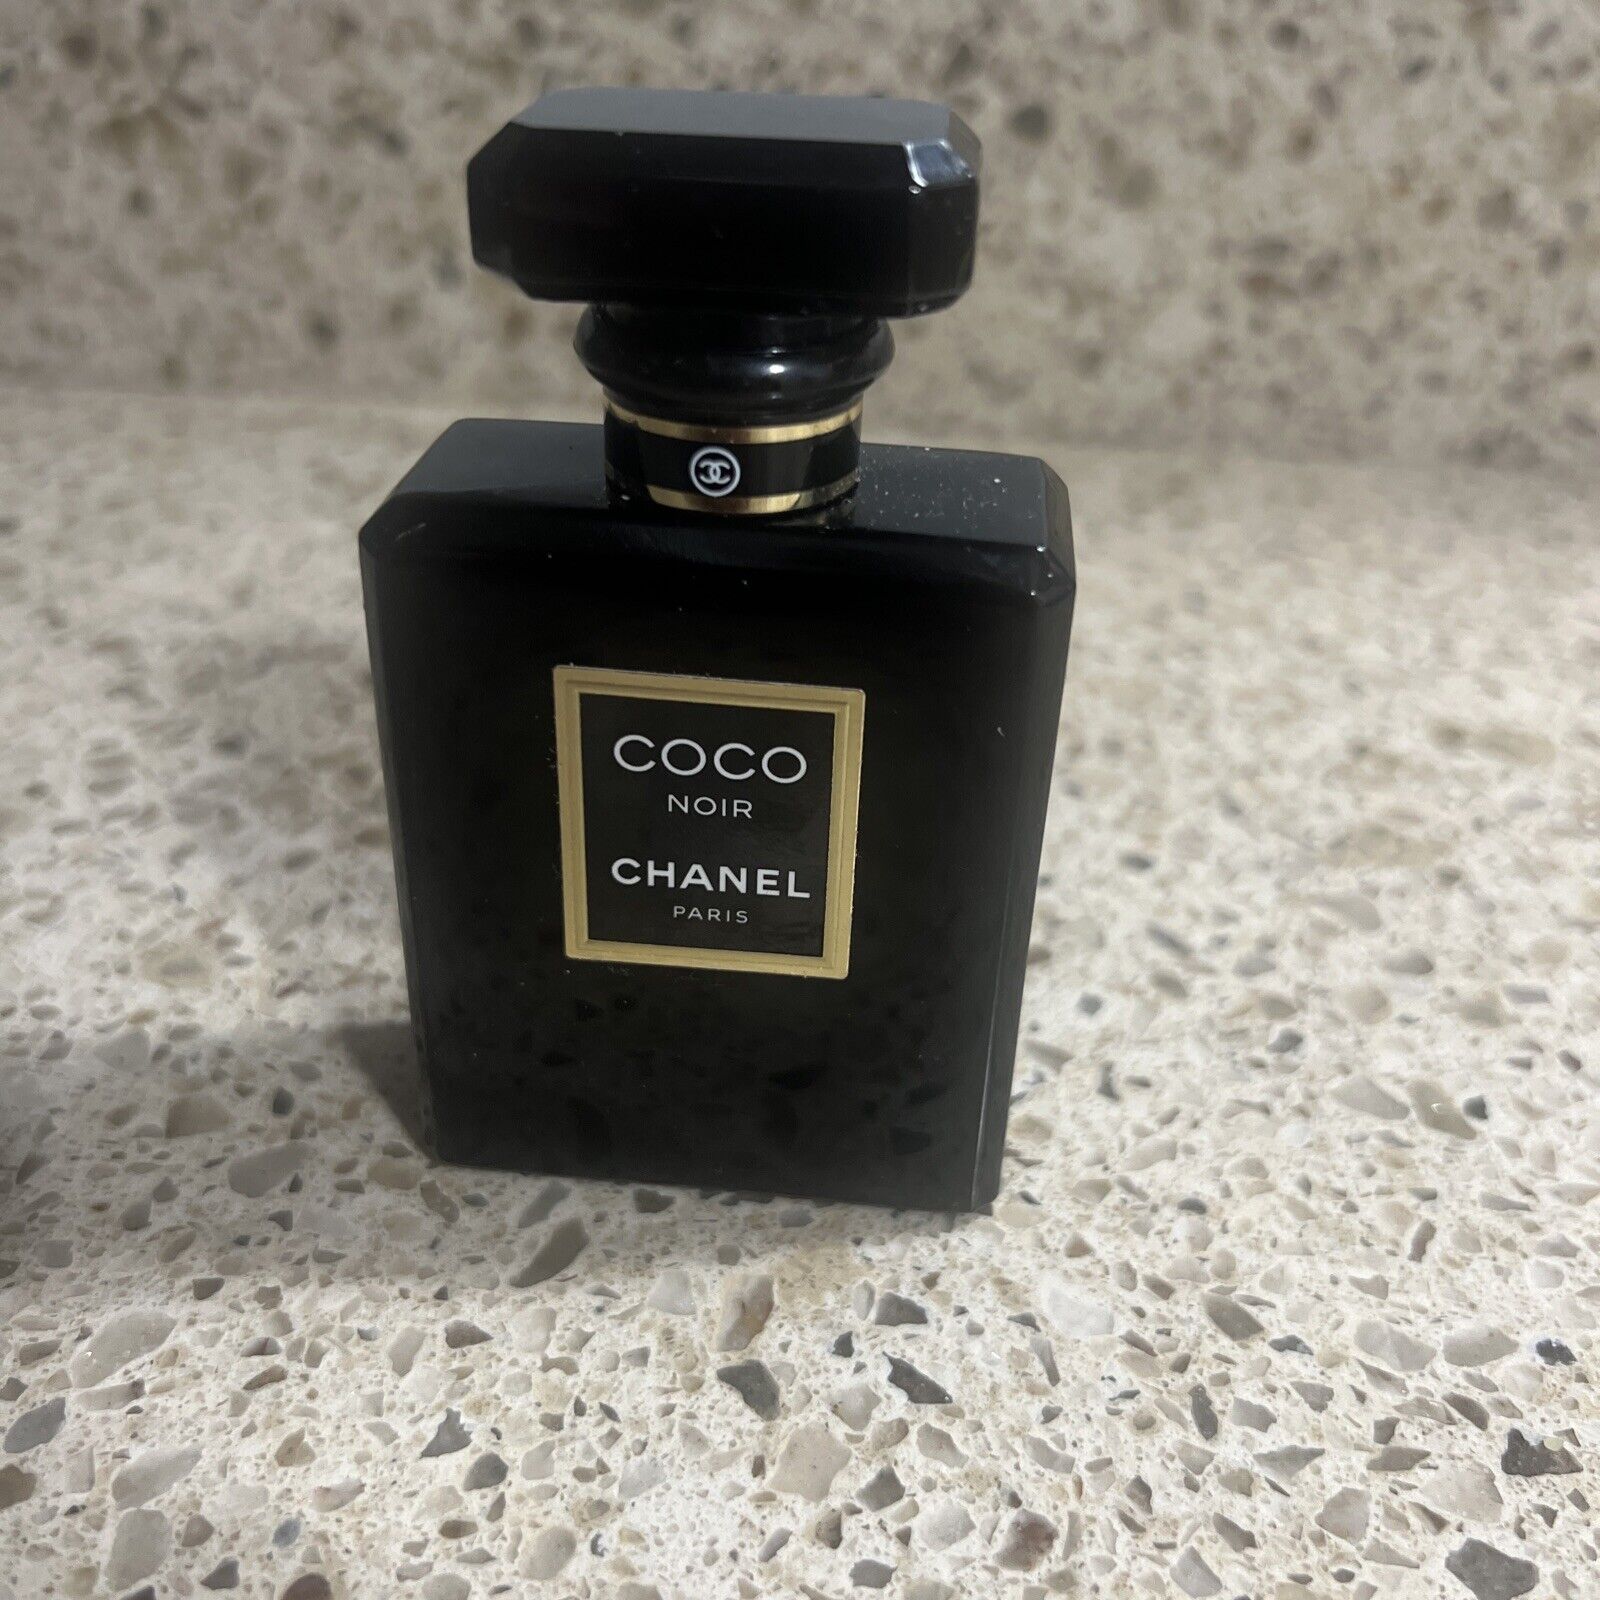 COCO Noir Chanel 1.7 FL oz. Eau De Parfum Spray MOSTLY FULL Lexuary Collectable